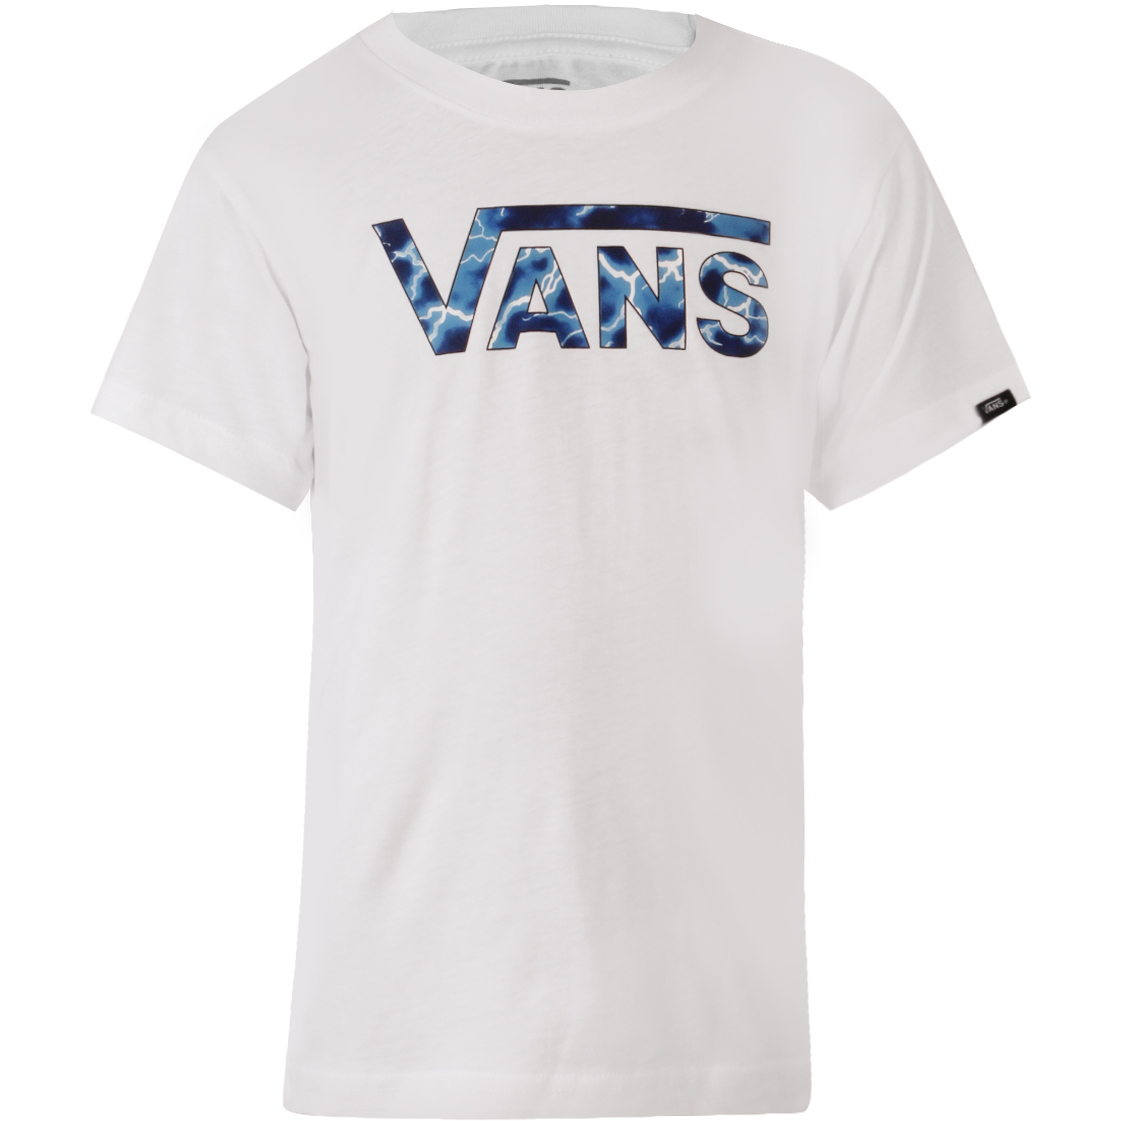 VANS T-SHIRT Mascheroni Store Bimbo True | CLASSIC Blue White/ LOGO